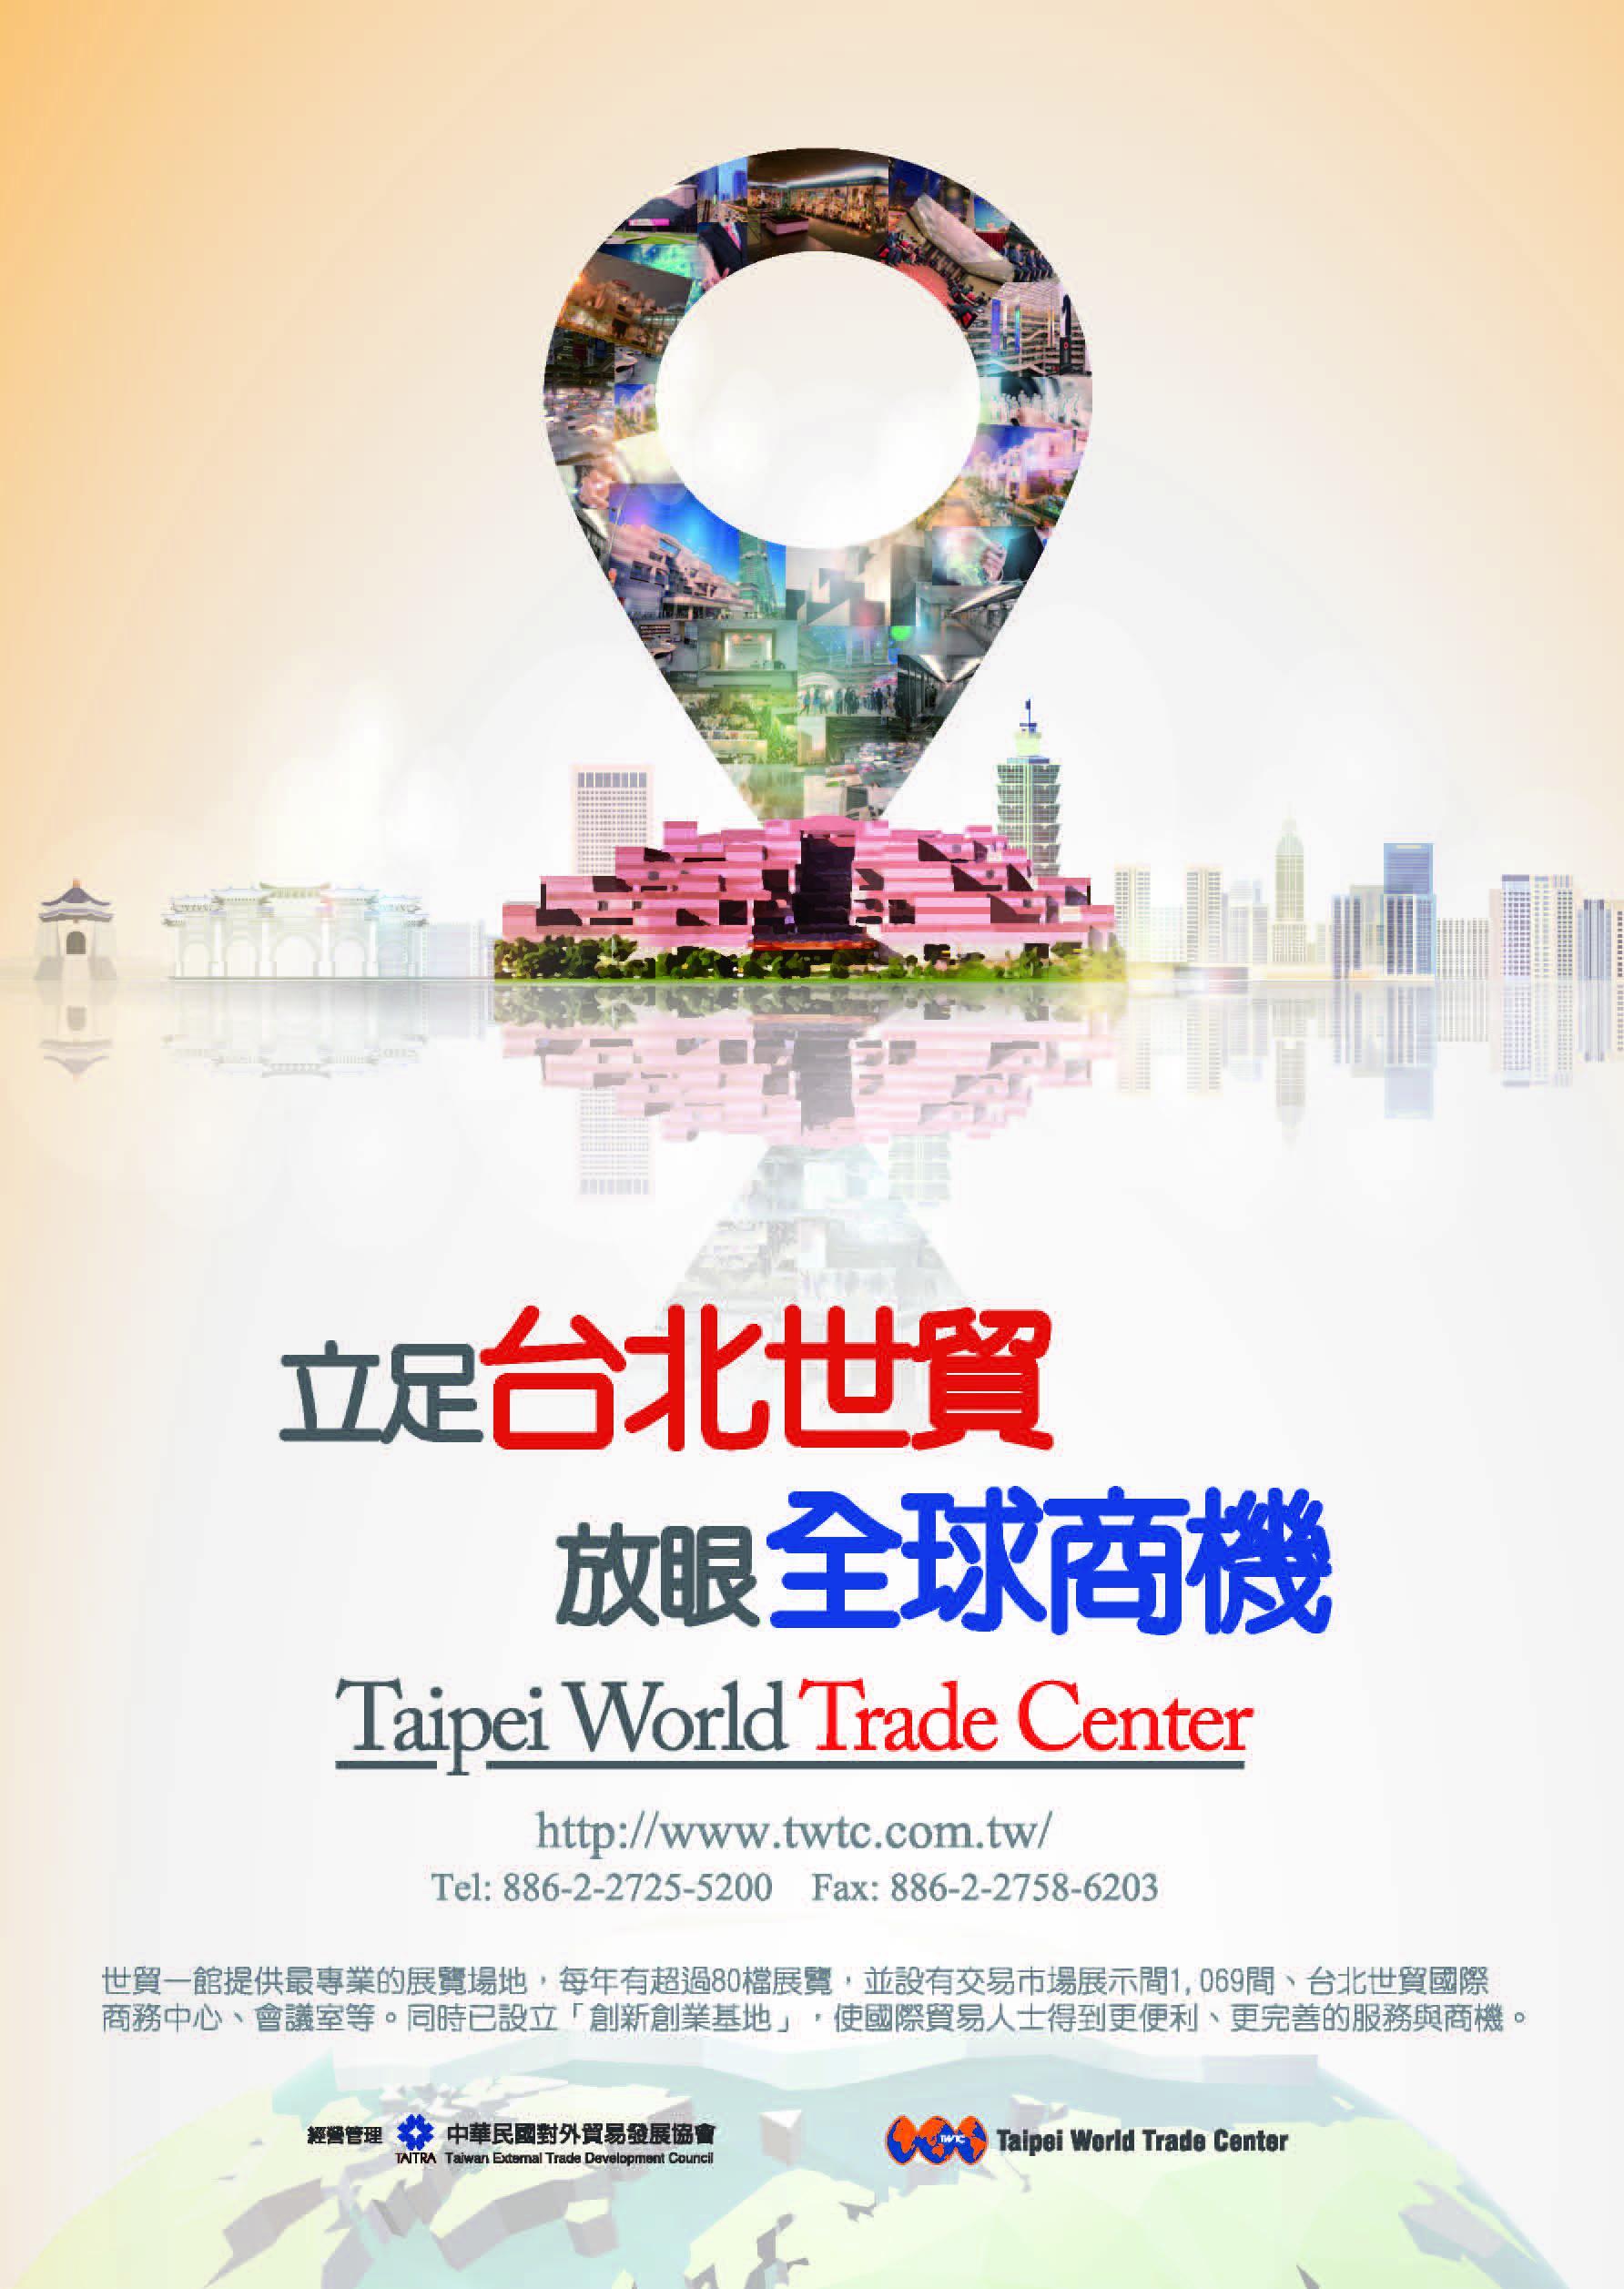 Taiwan World Trade Association